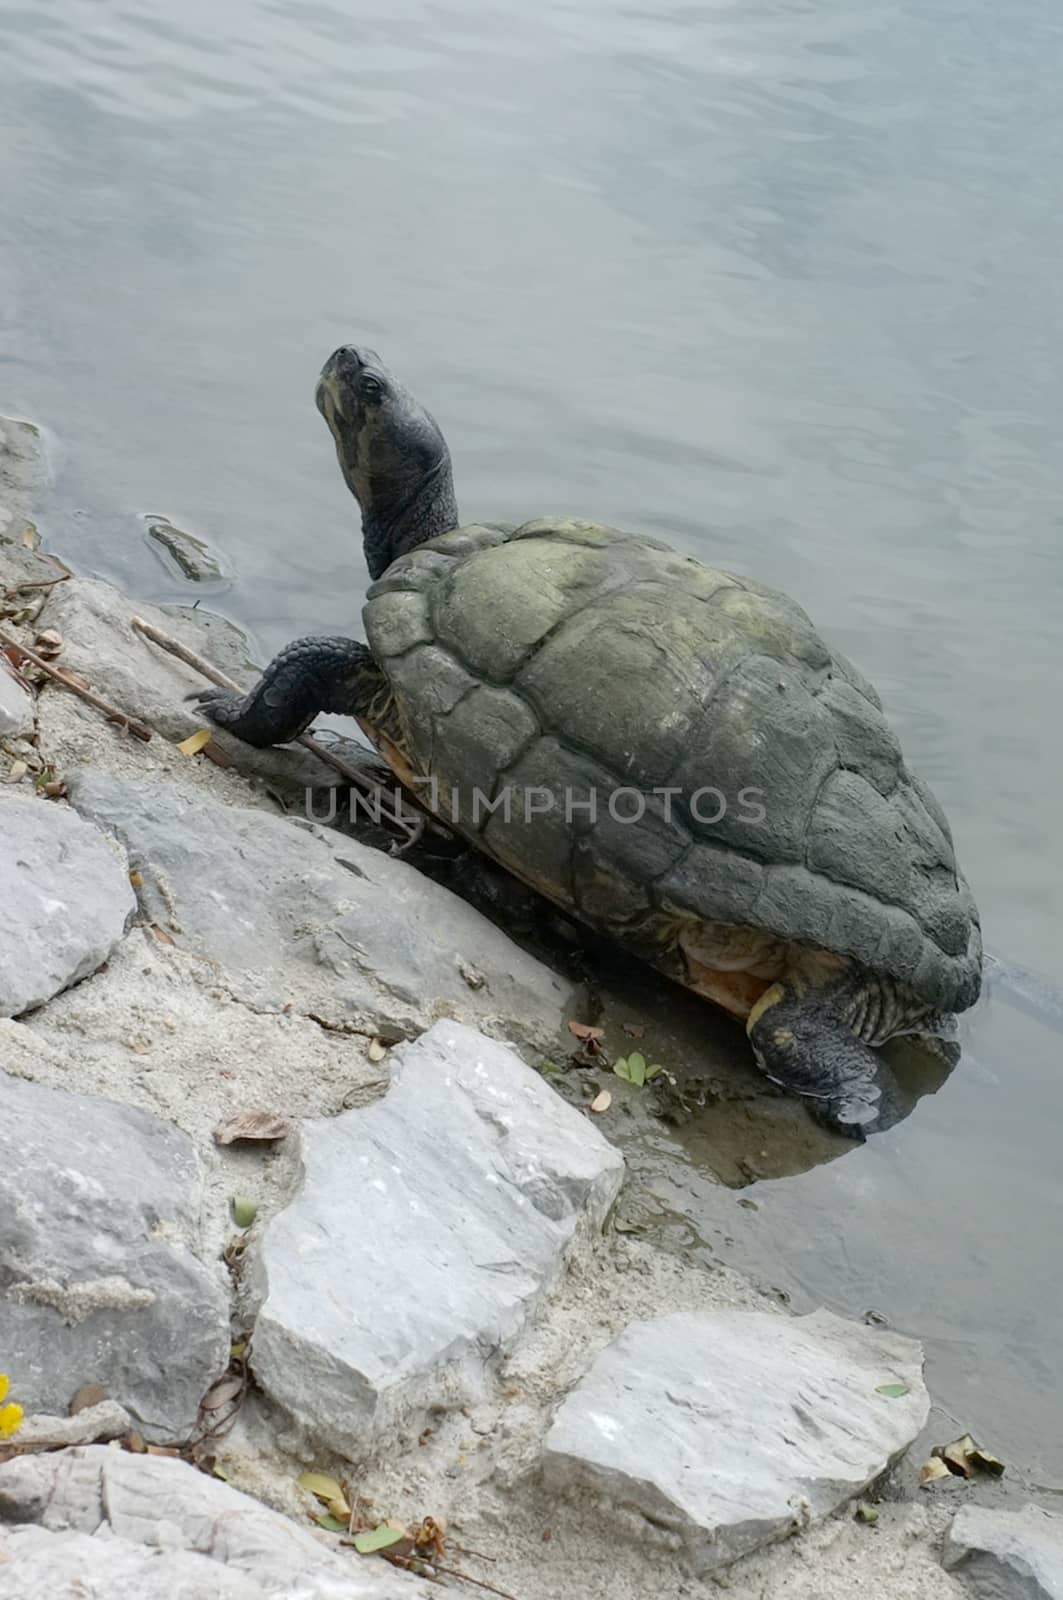 Turtle walking on the rock by Hepjam